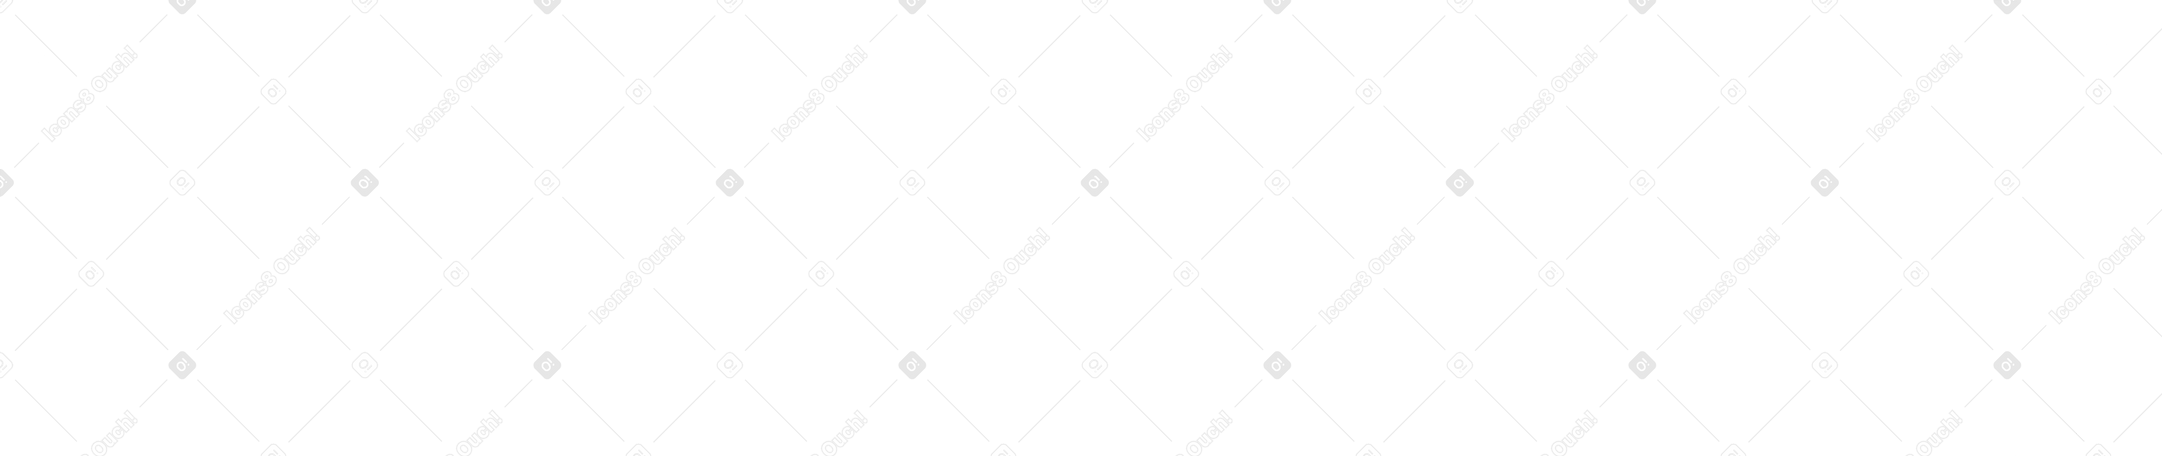 Botón rectangular blanco para la interfaz PNG, SVG